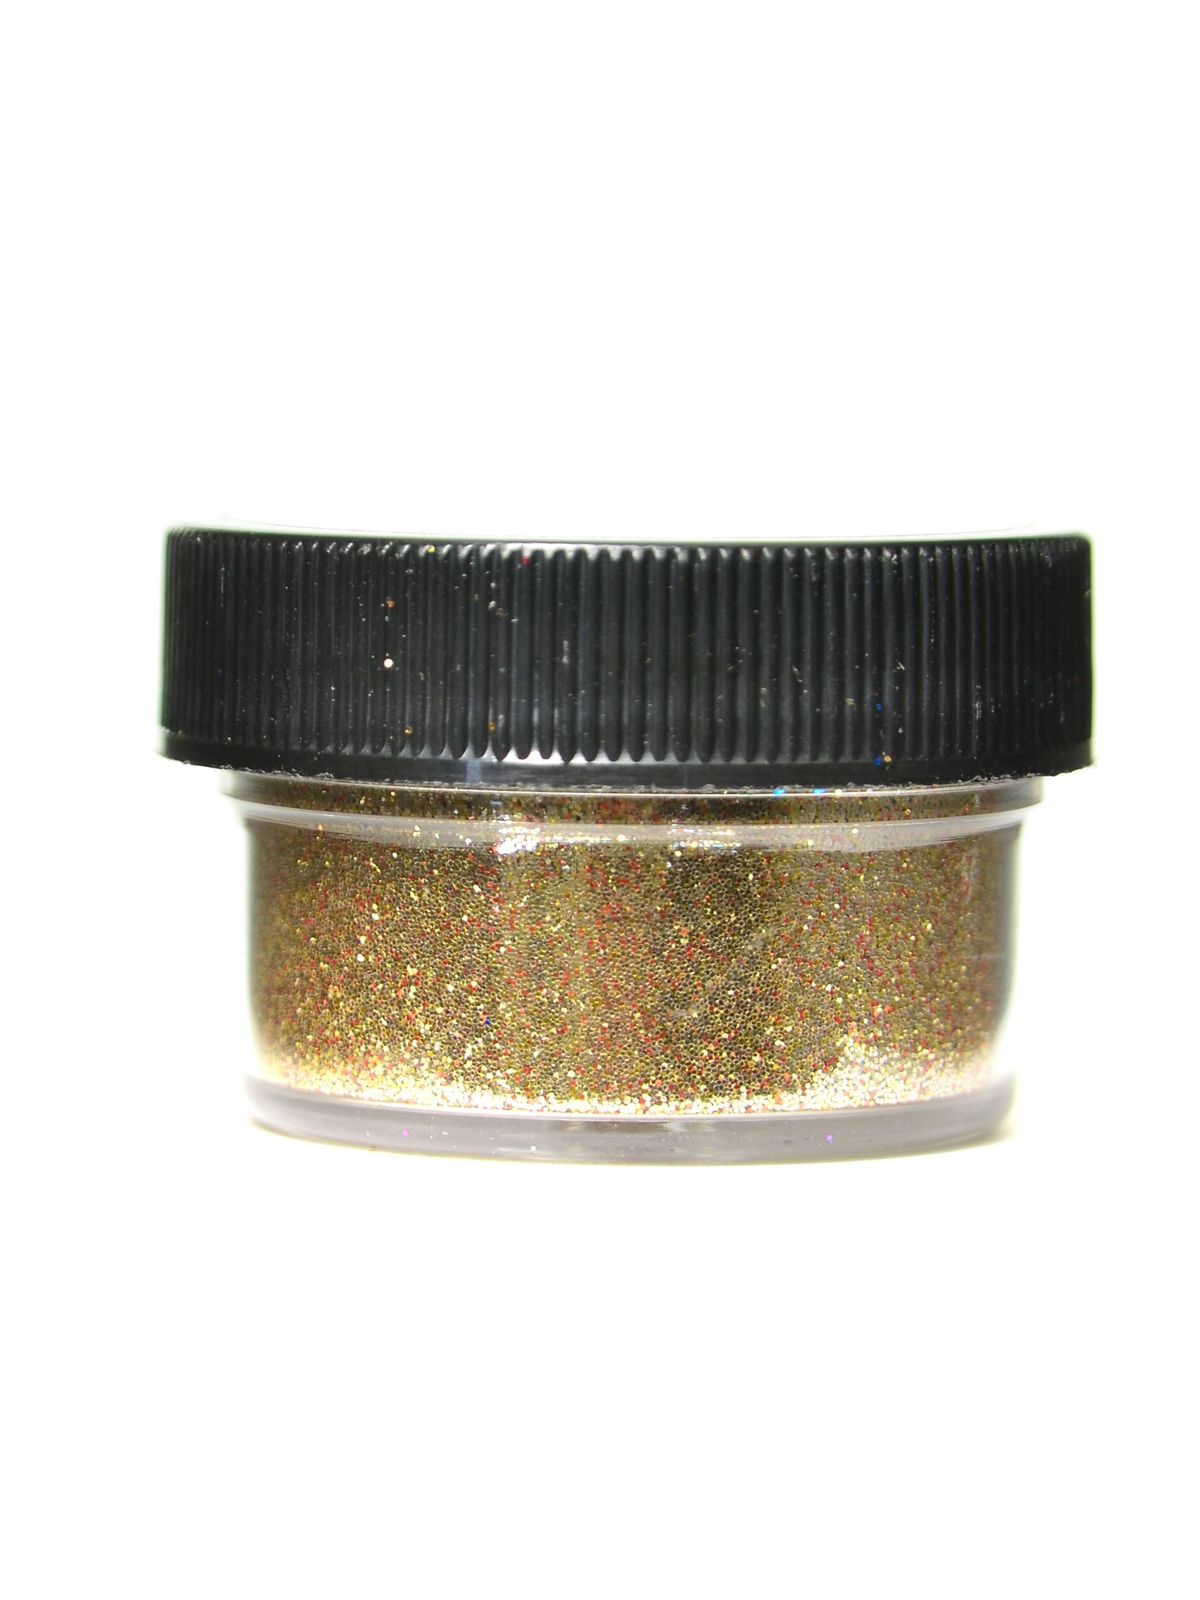 Ultrafine Opaque Glitter Antique Gold 1 2 Oz. Jar